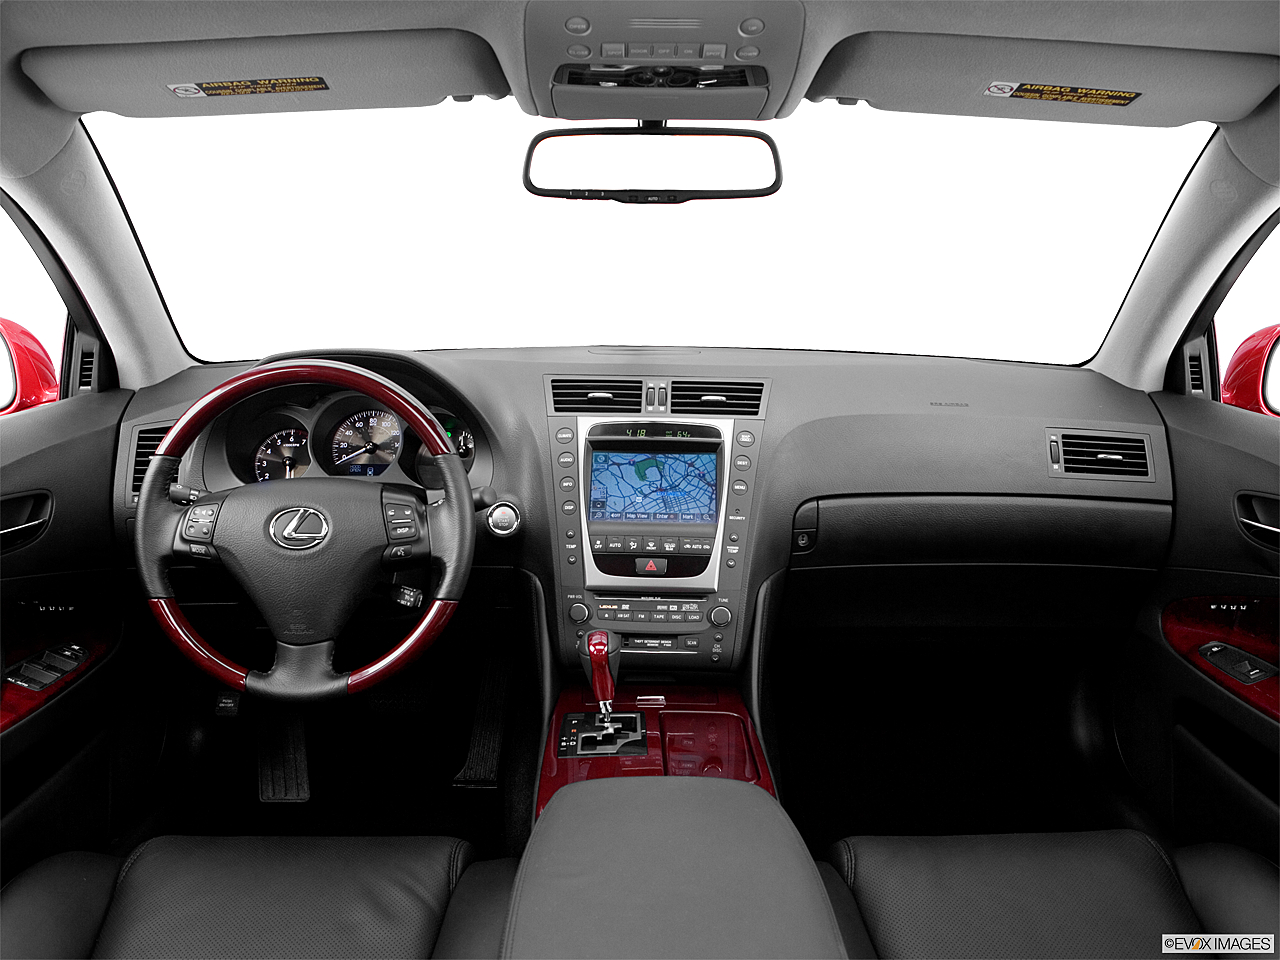 2006 Lexus GS 430 4dr Sedan - Research - GrooveCar